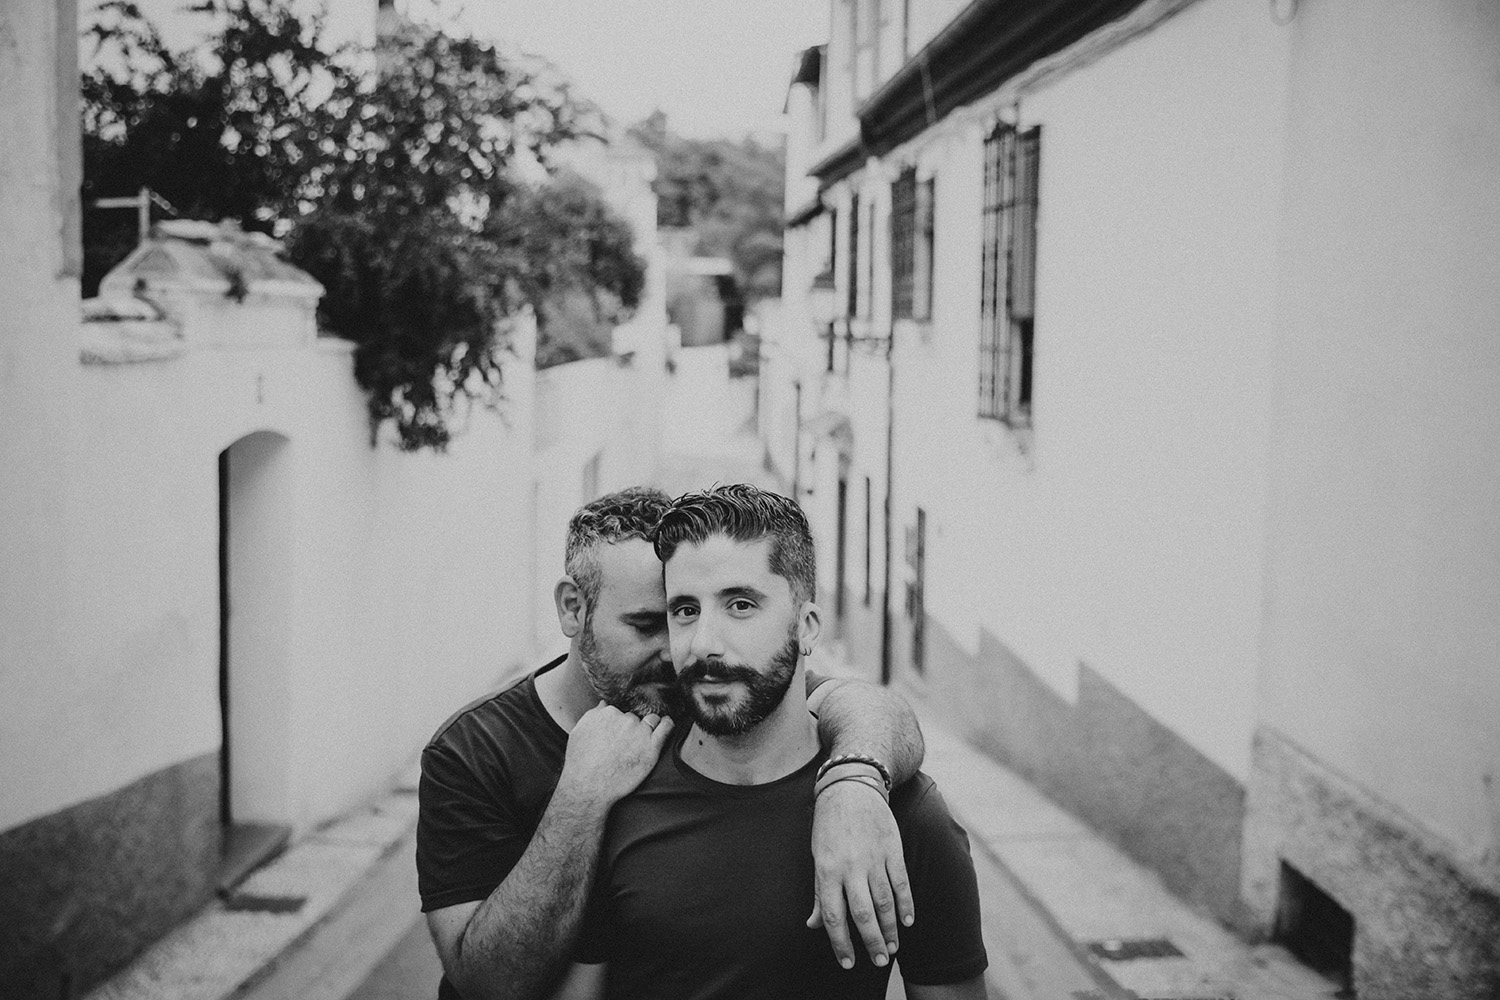 preboda-granada-serrallo-fotografo-boda-lgtb-gay-Jose_Reyes-14.jpg